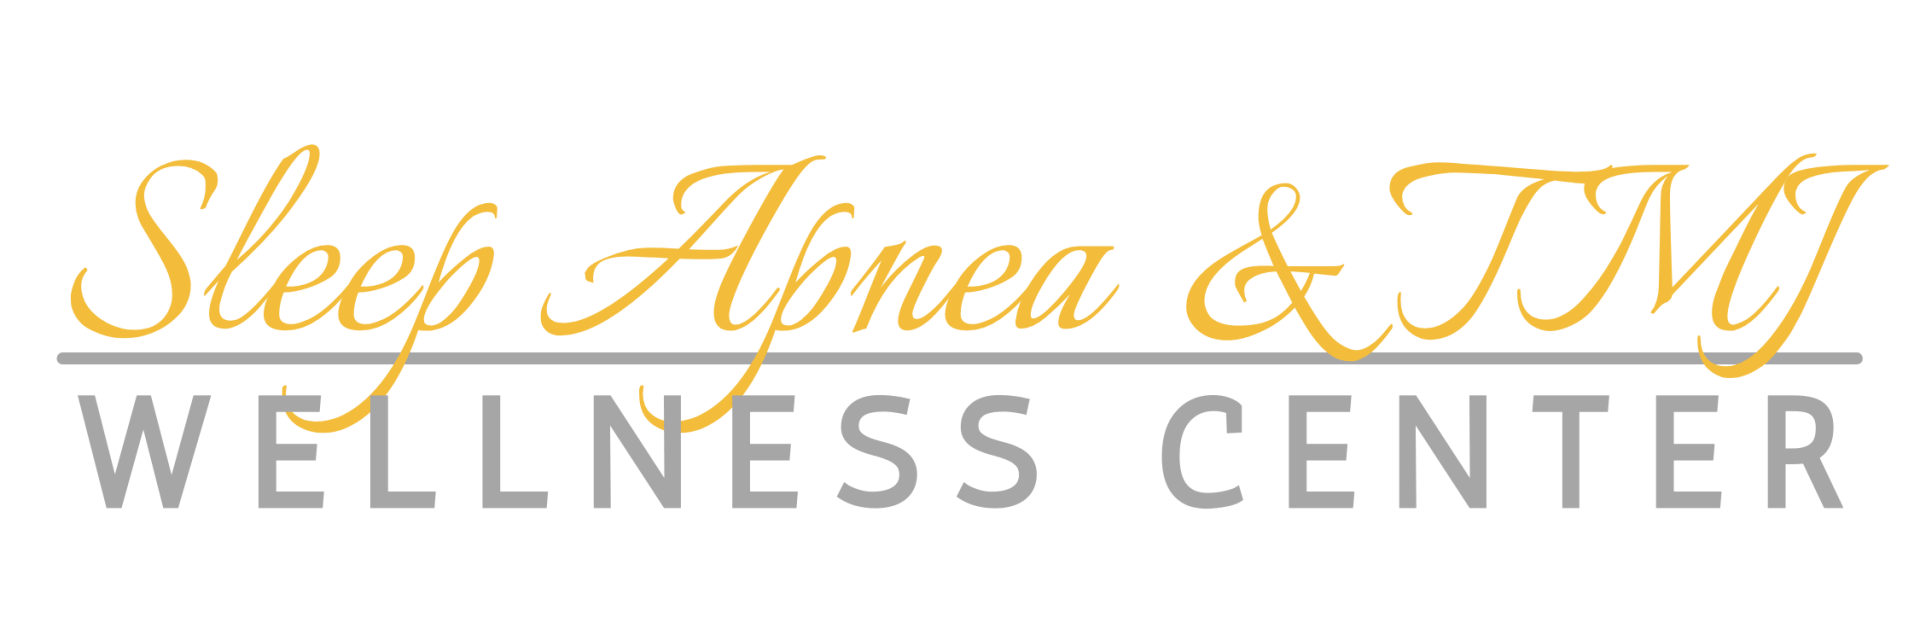 Sleep Apnea & TMJ Wellness Center